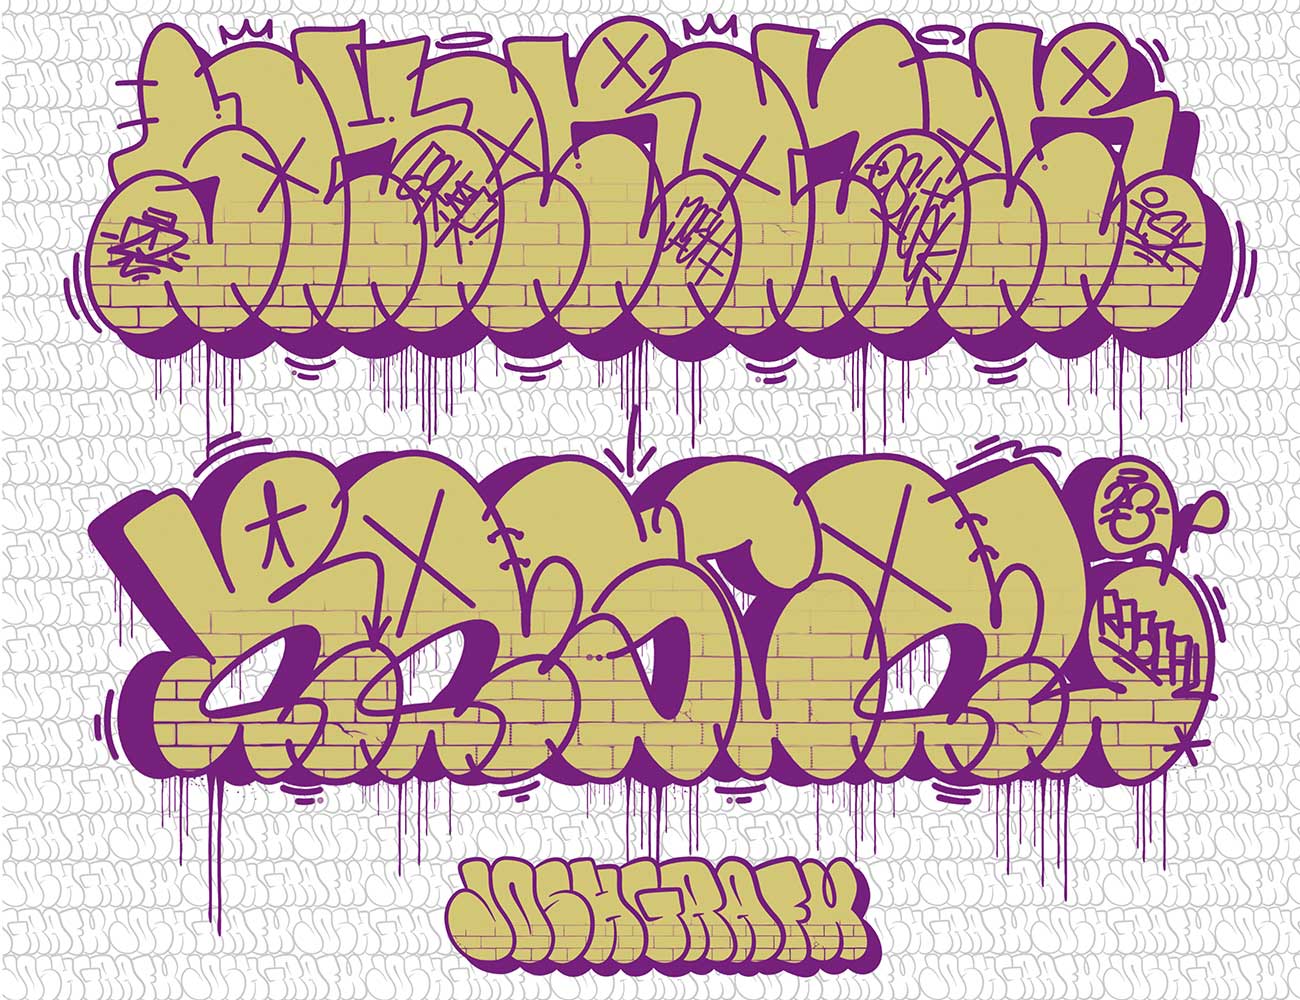 graffiti throwies by Josh Grafx